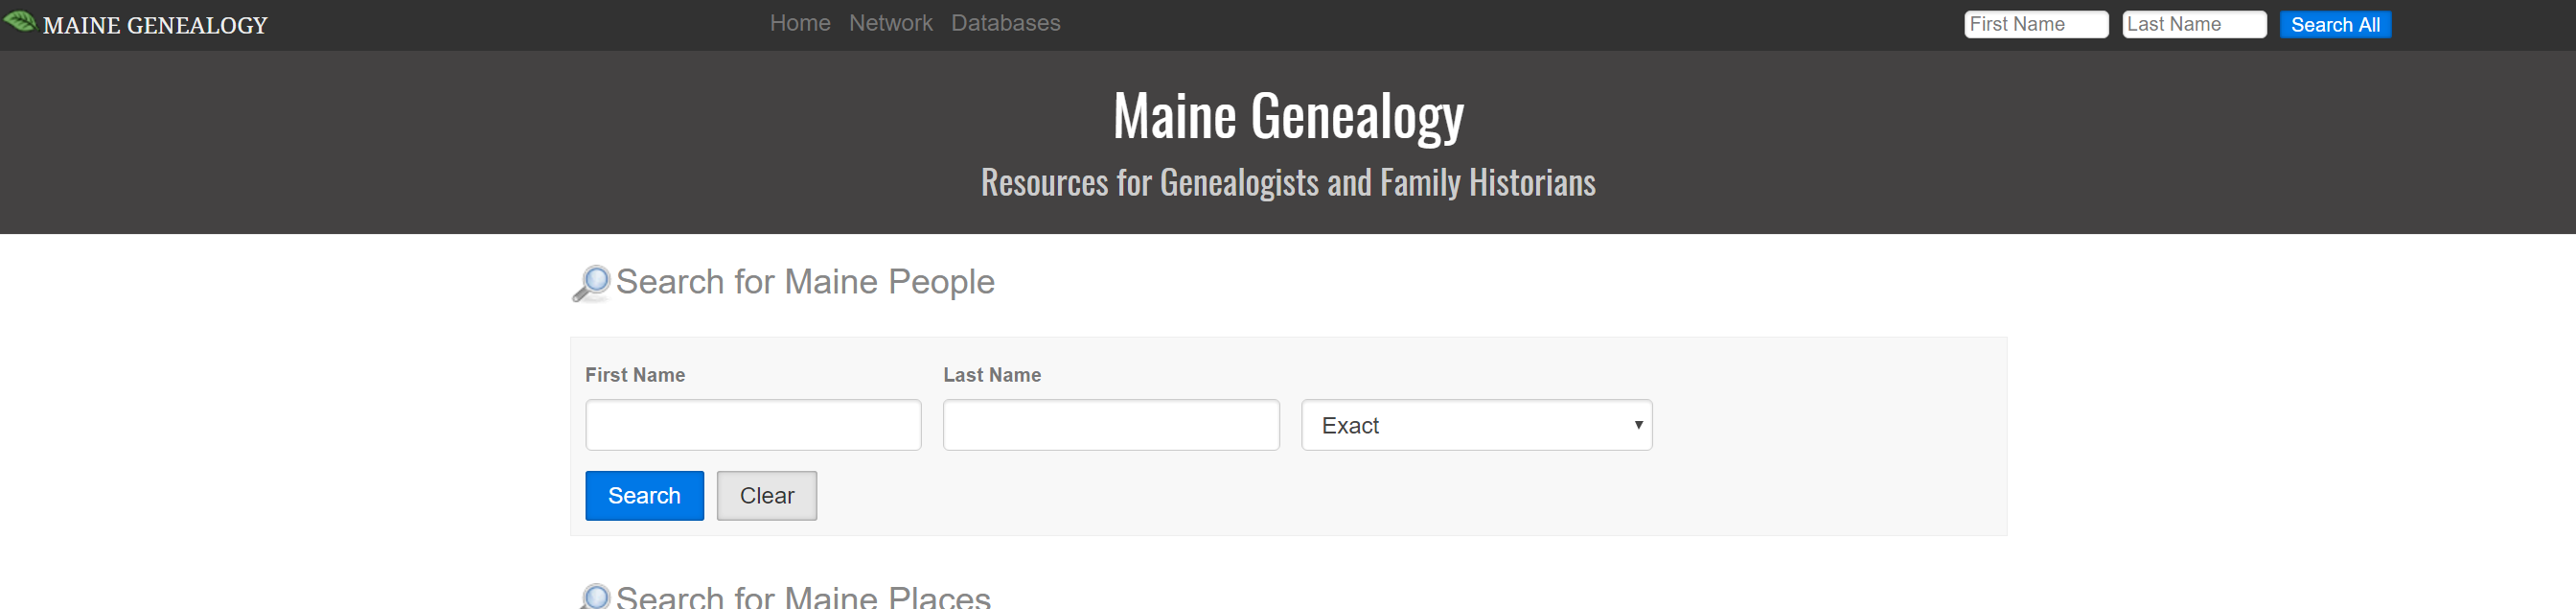 Maine Genealogy Network